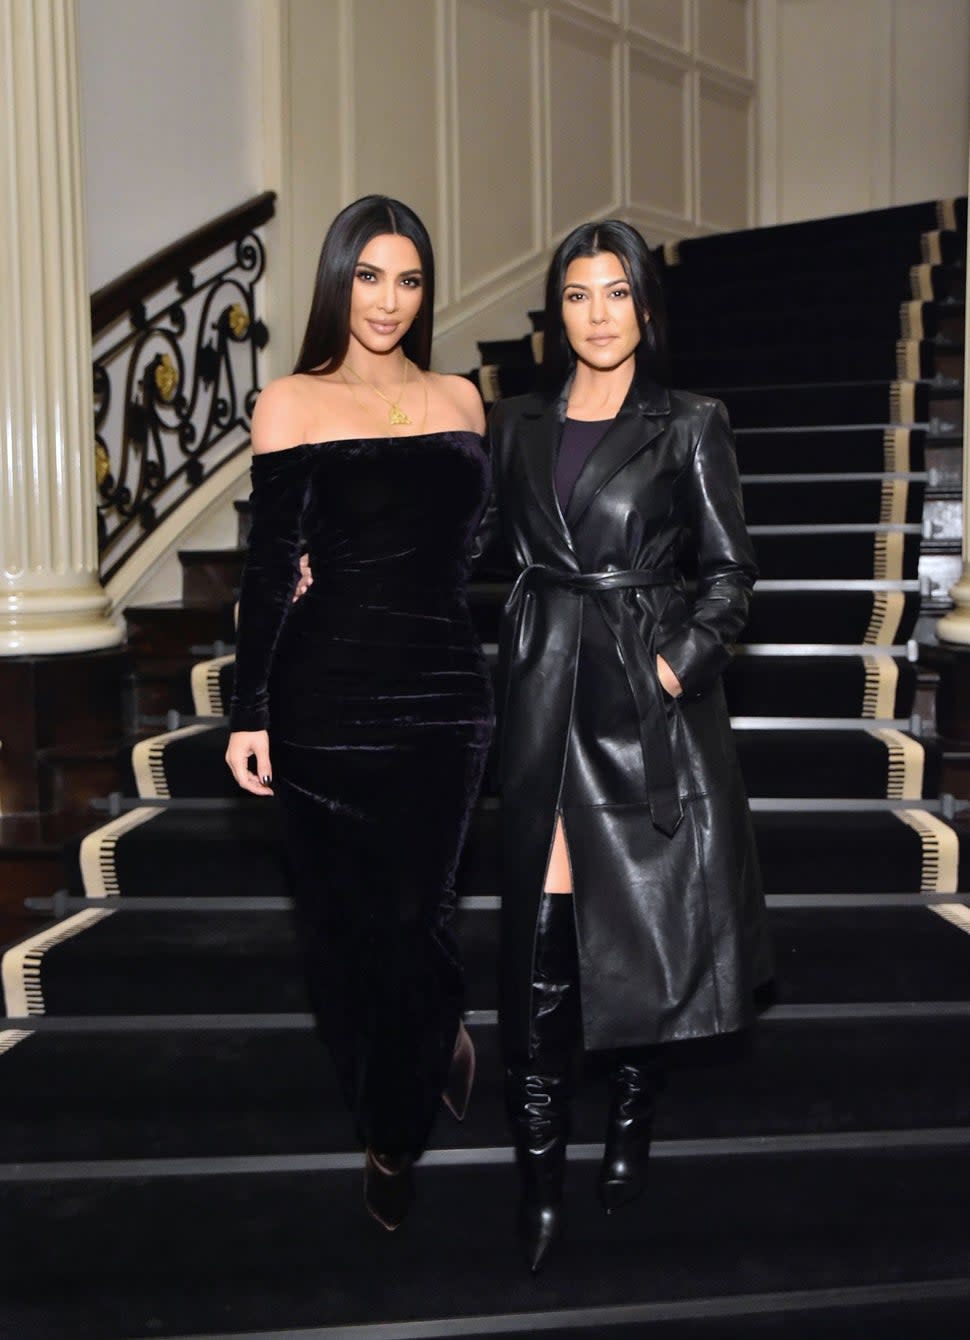  Kim Kardashian and Kourtney Kardashian attend VIOLET GREY x Victoria Beckham Beauty LA Dinner hosted by Lynda Resnick and Cassandra Grey at a Private Residence on November 20, 2019 in Beverly Hills, California.